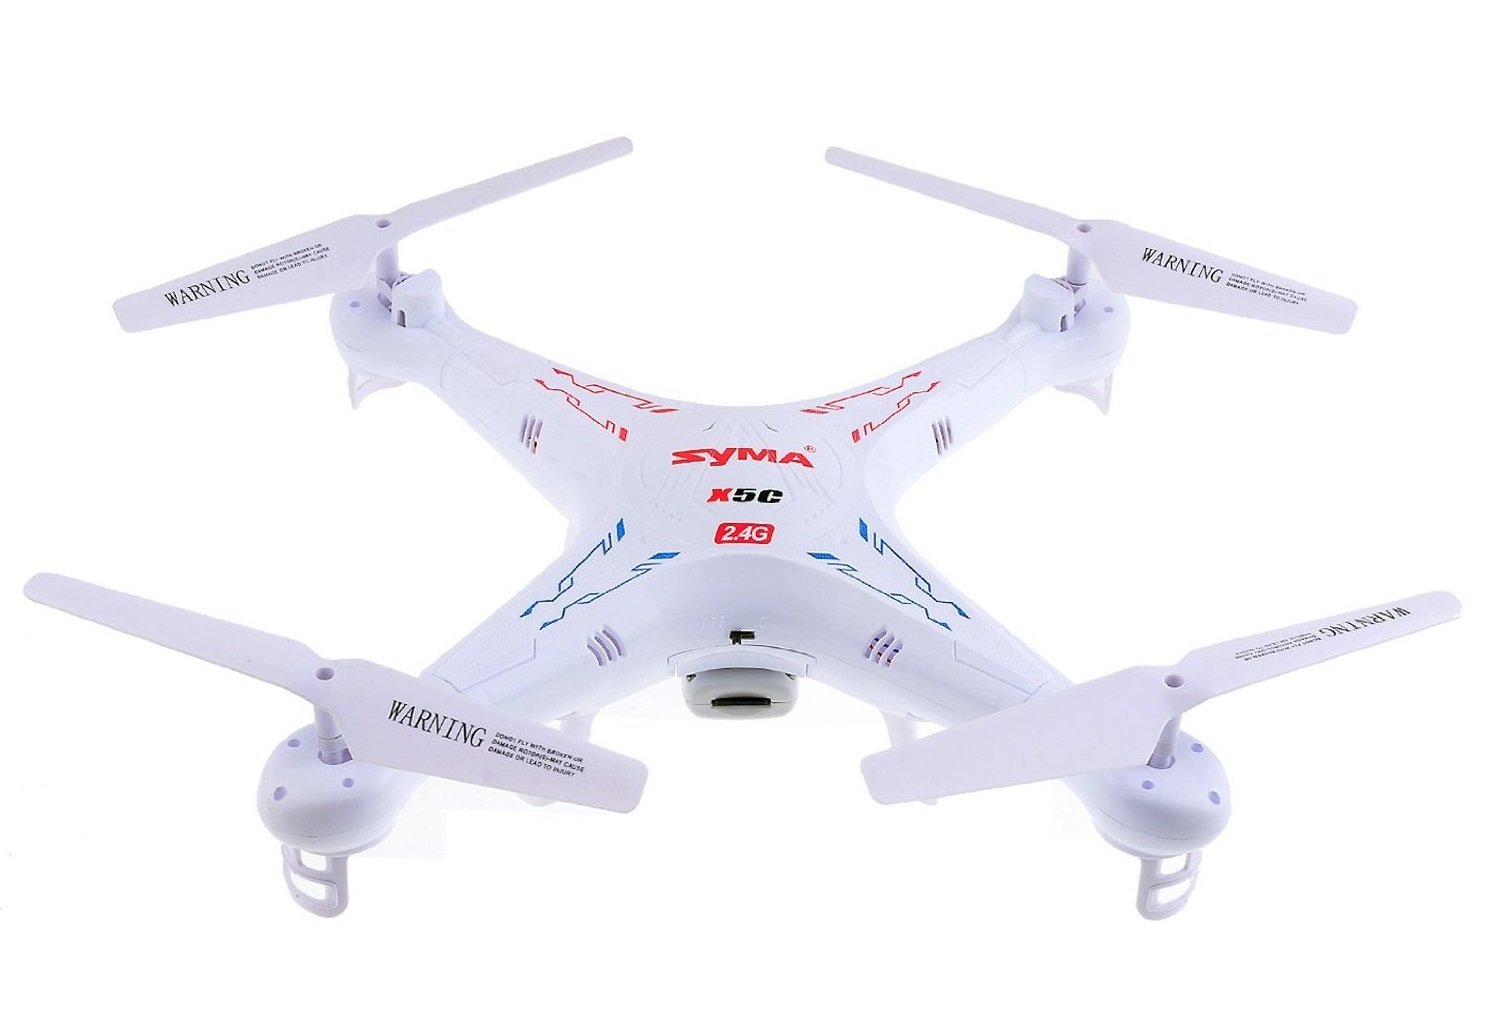 Syma X5C 2.4G Quadcopter Drone